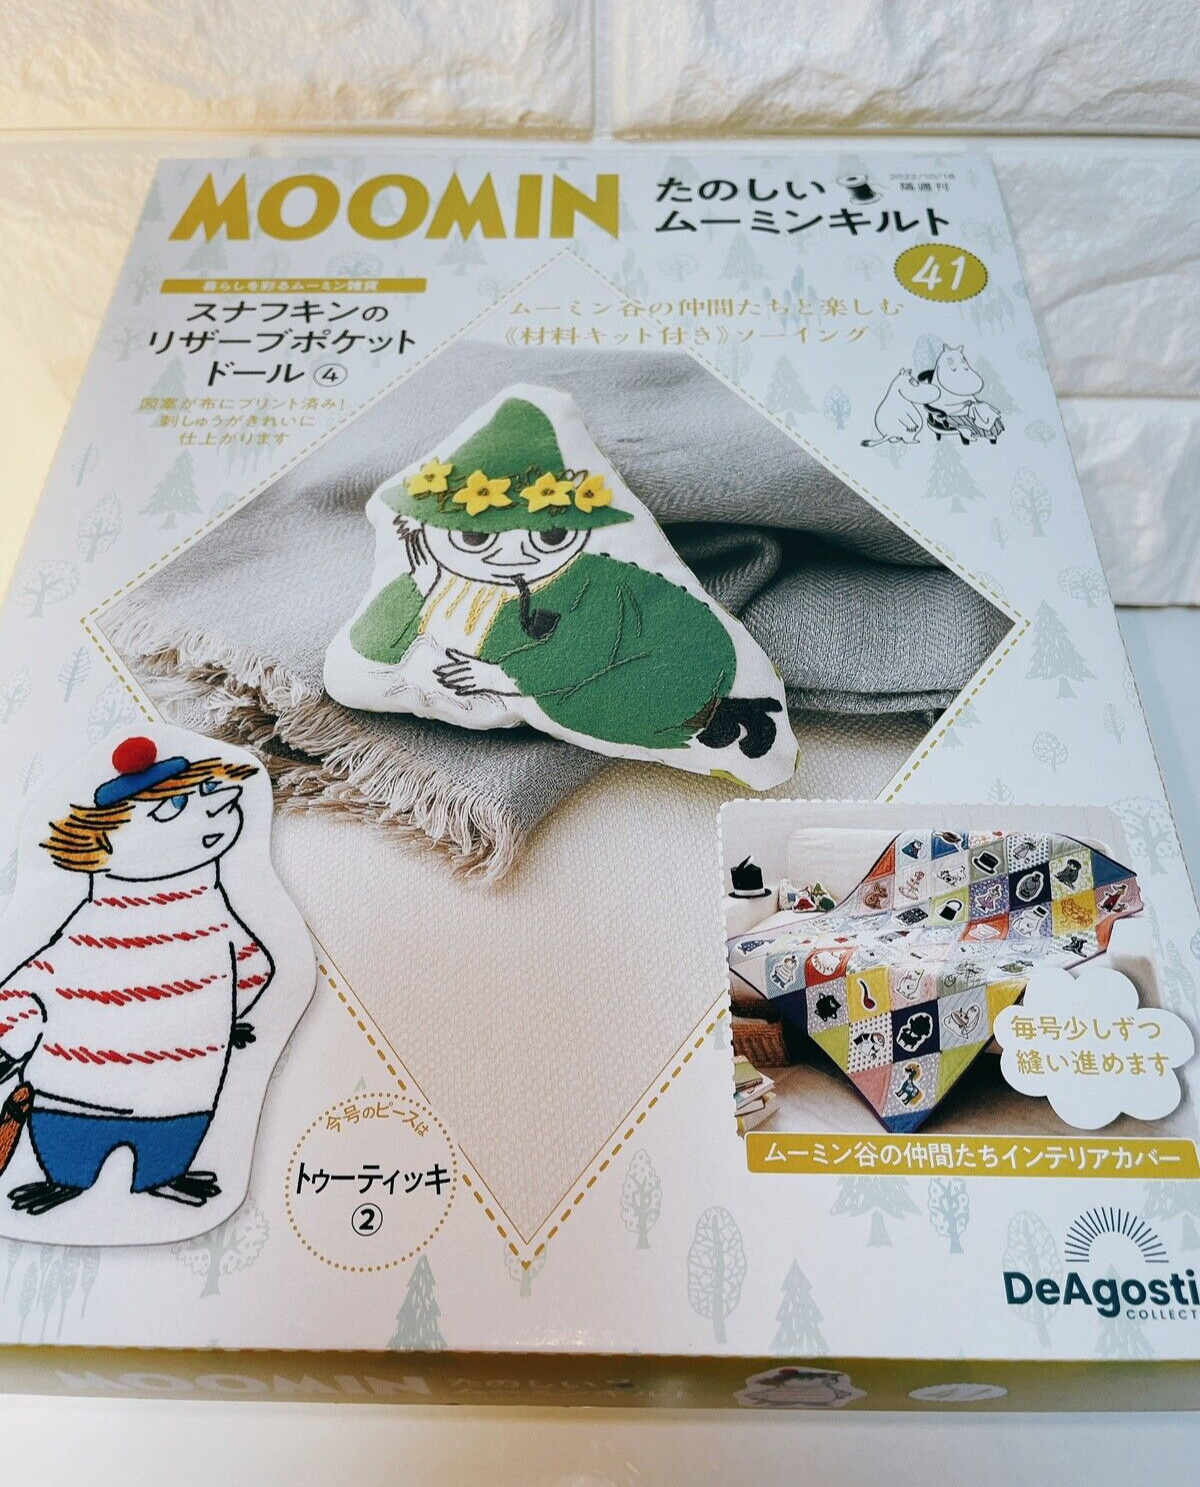 MOOMIN Fun quilt Original design Sewing Book Handmade Collection Japan #41